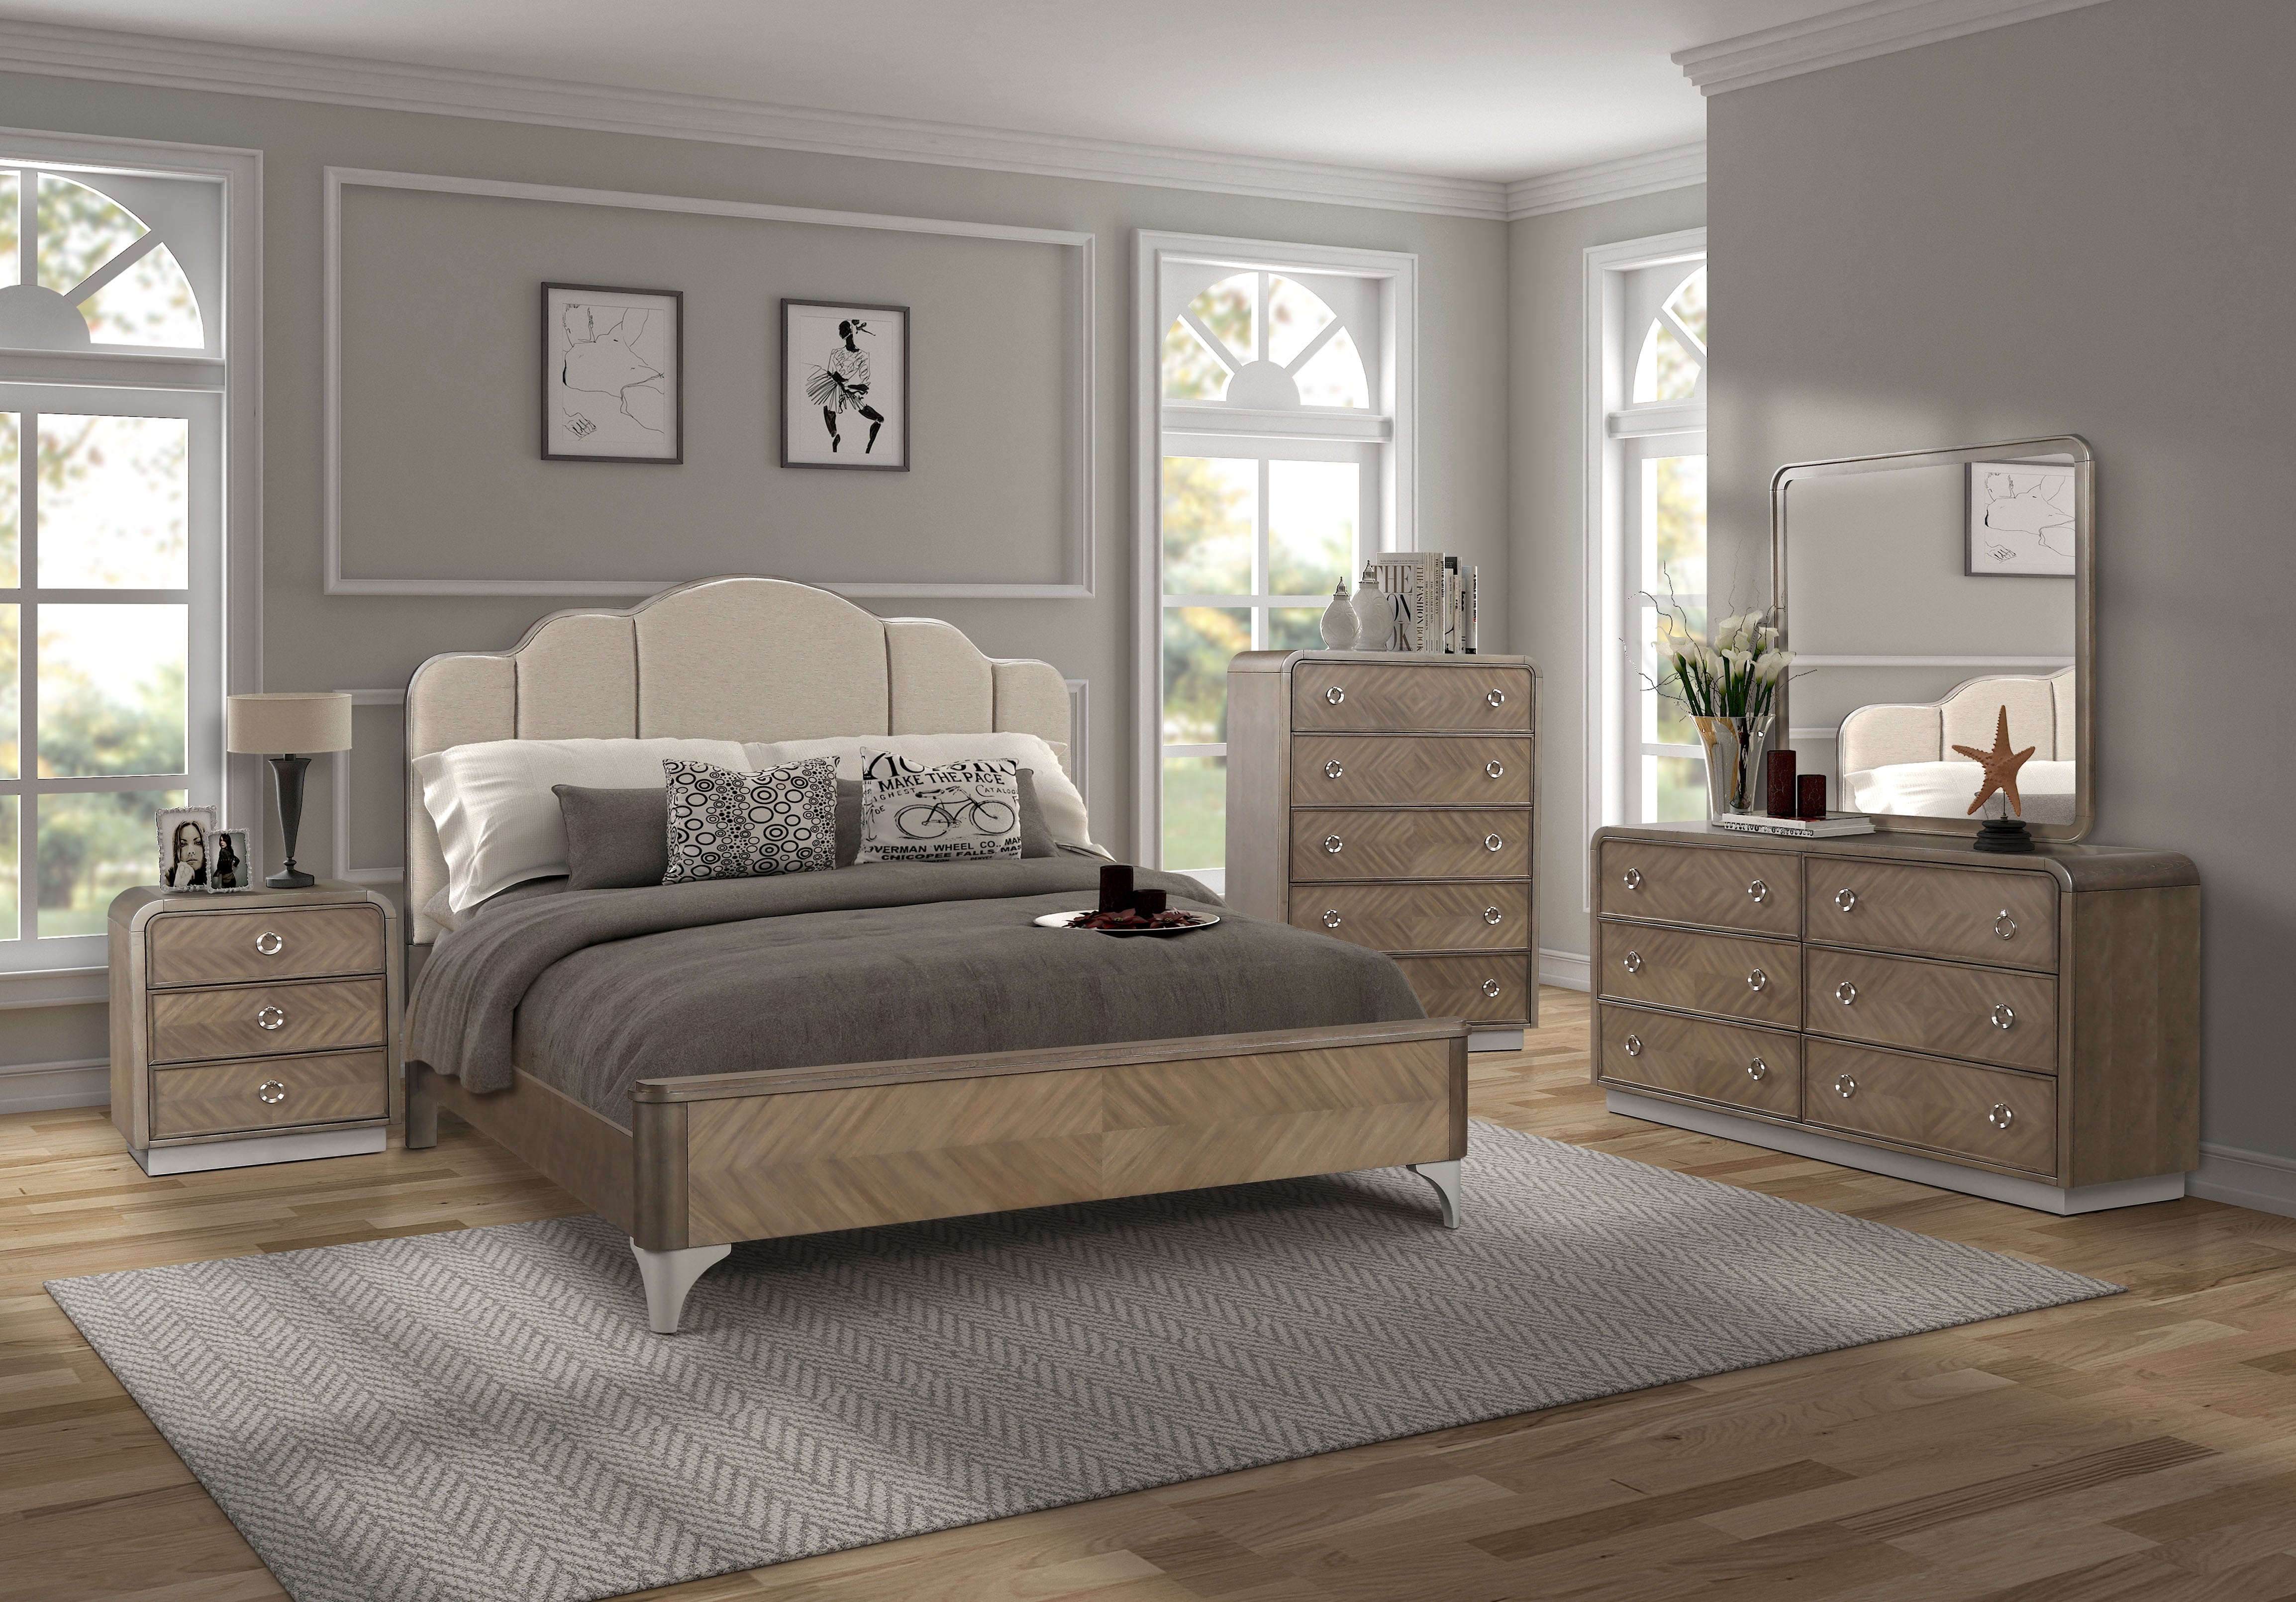 Oasis Home Cascade 5-Piece King Size Bedroom Furniture Set